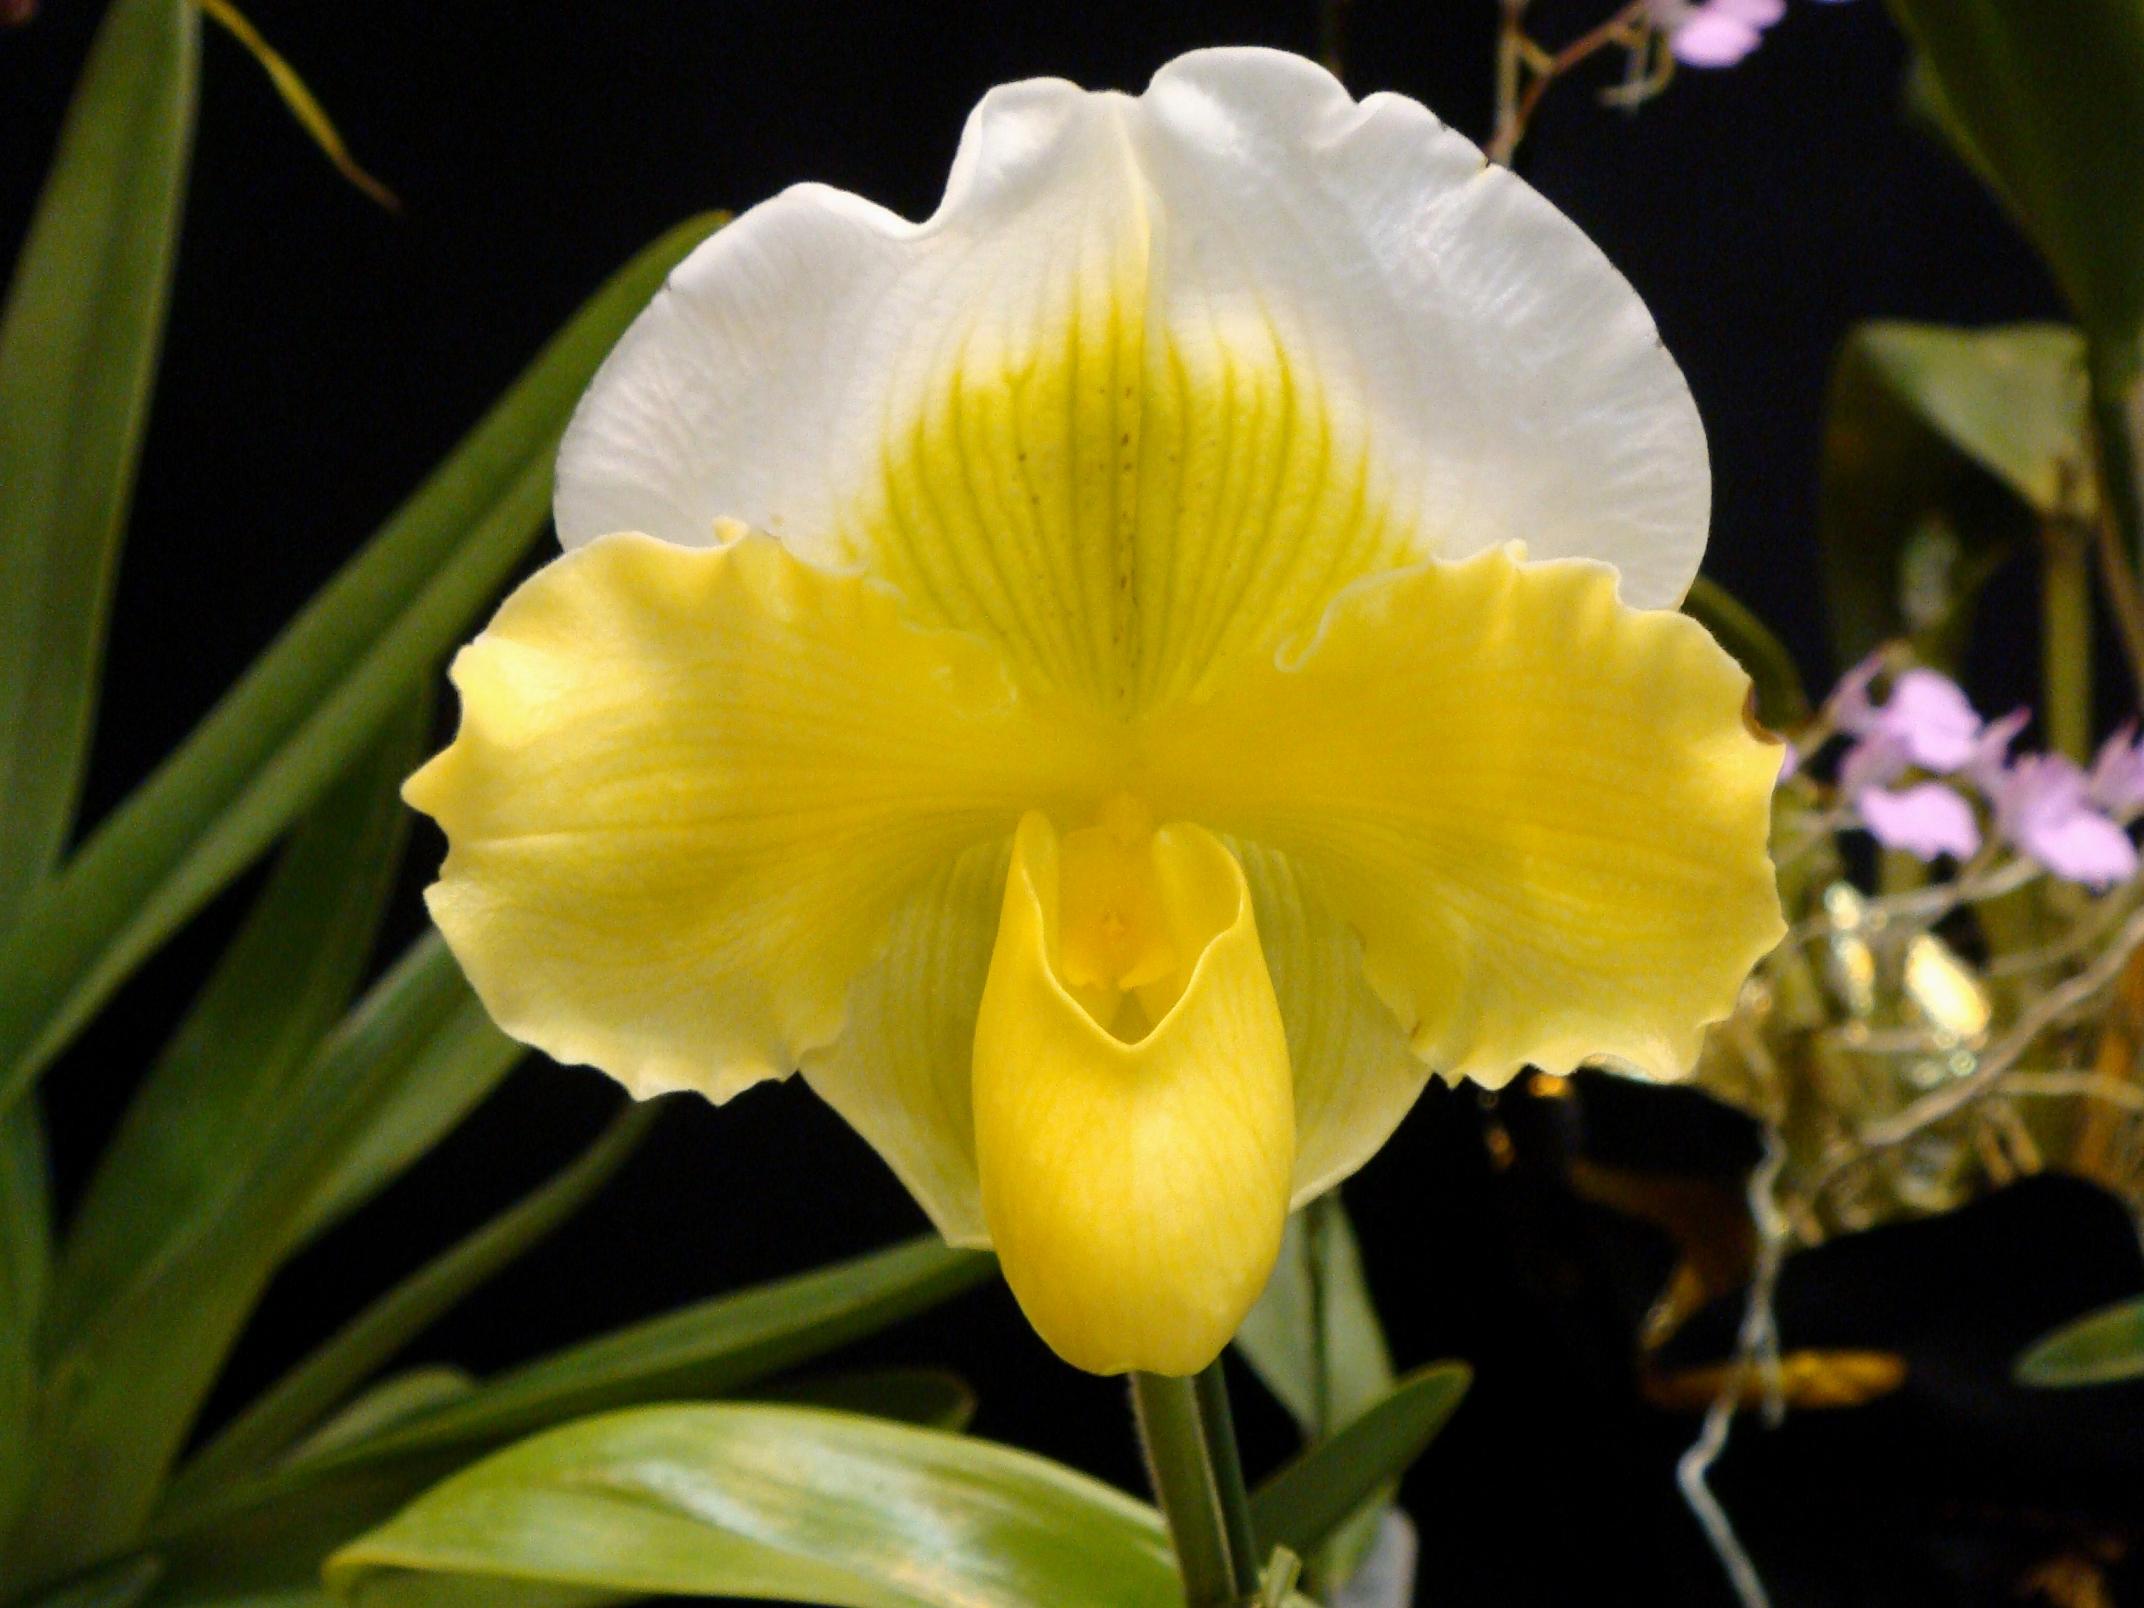 http://hybridorchid.la.coocan.jp/Paphiopedilum/Paphiopedilum%20Hamana%20Island/DSC09415.JPG